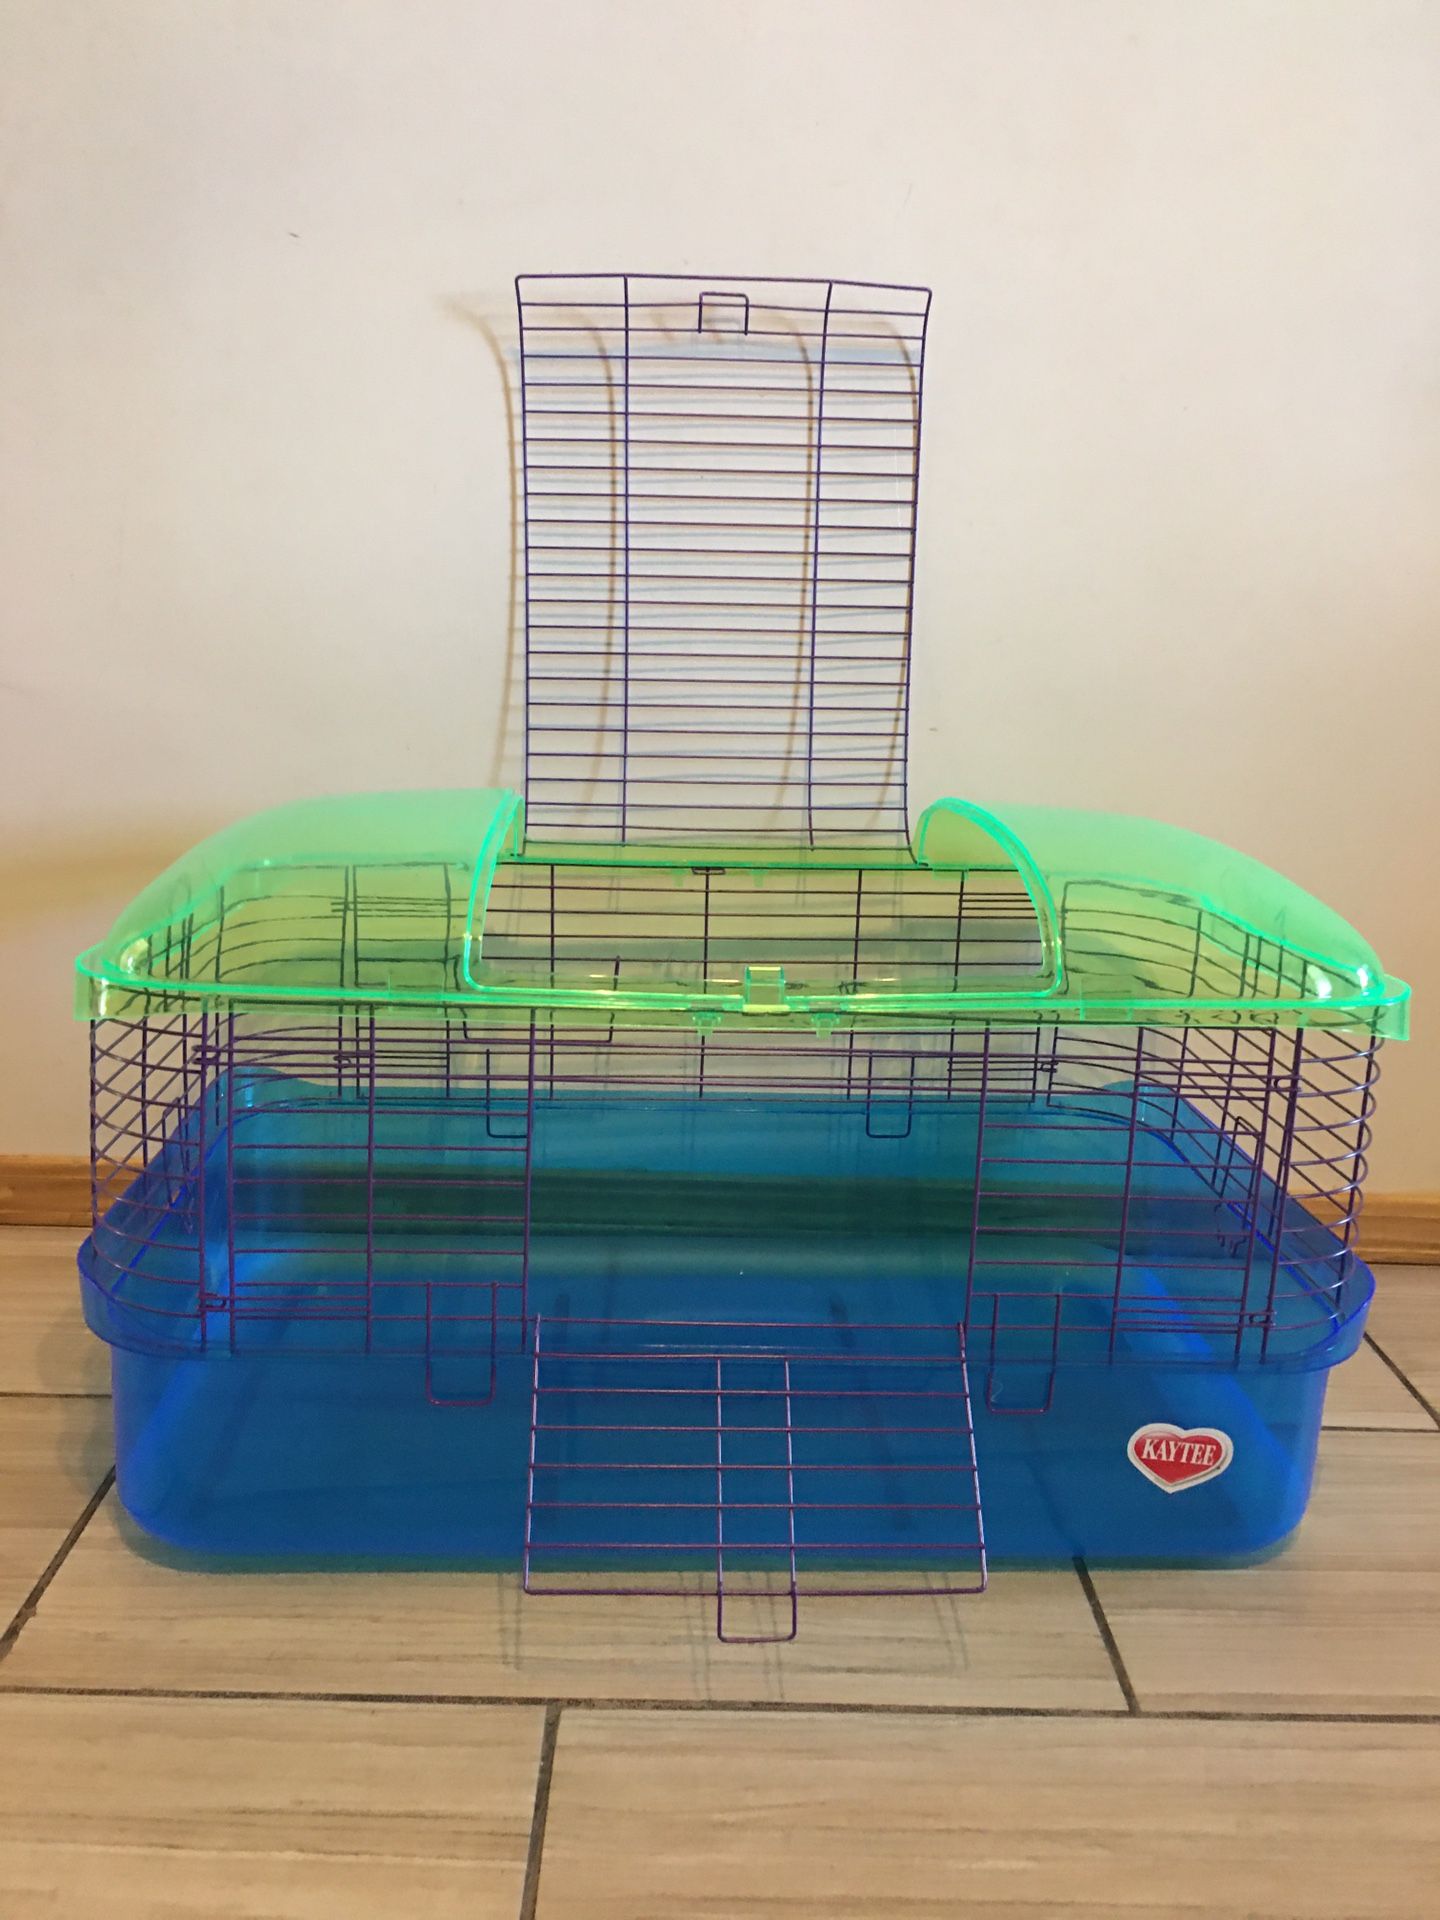 KAYTEE Guinea Pig/Hamster/Rabbit Cage